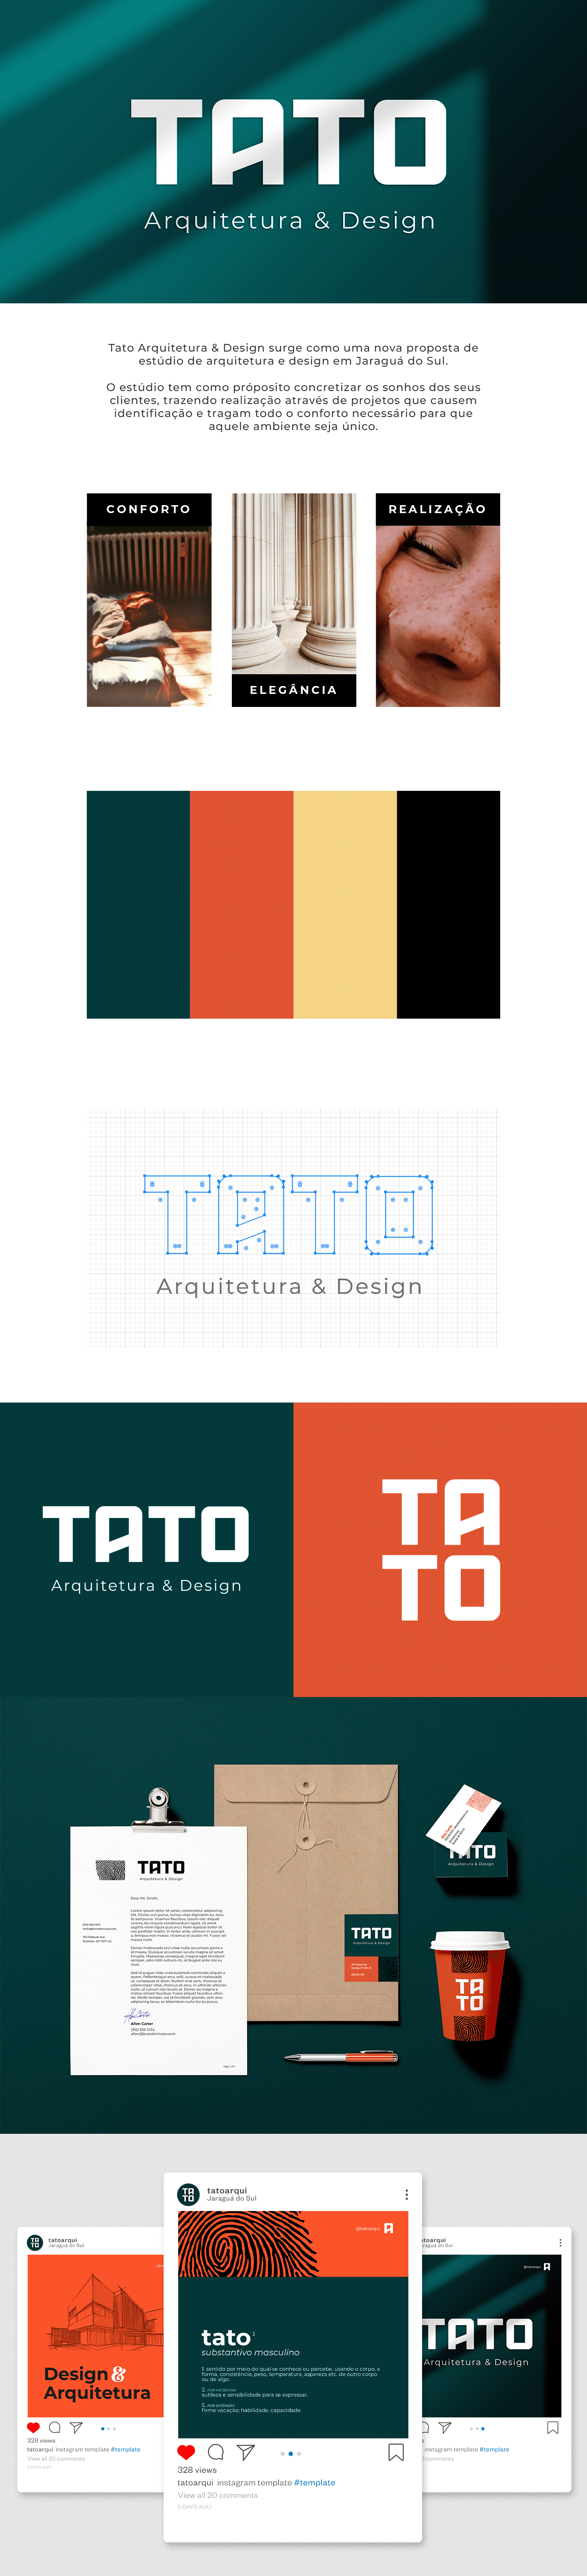 ARQUITETURA branding  design identidade visual Logotipo marca naming